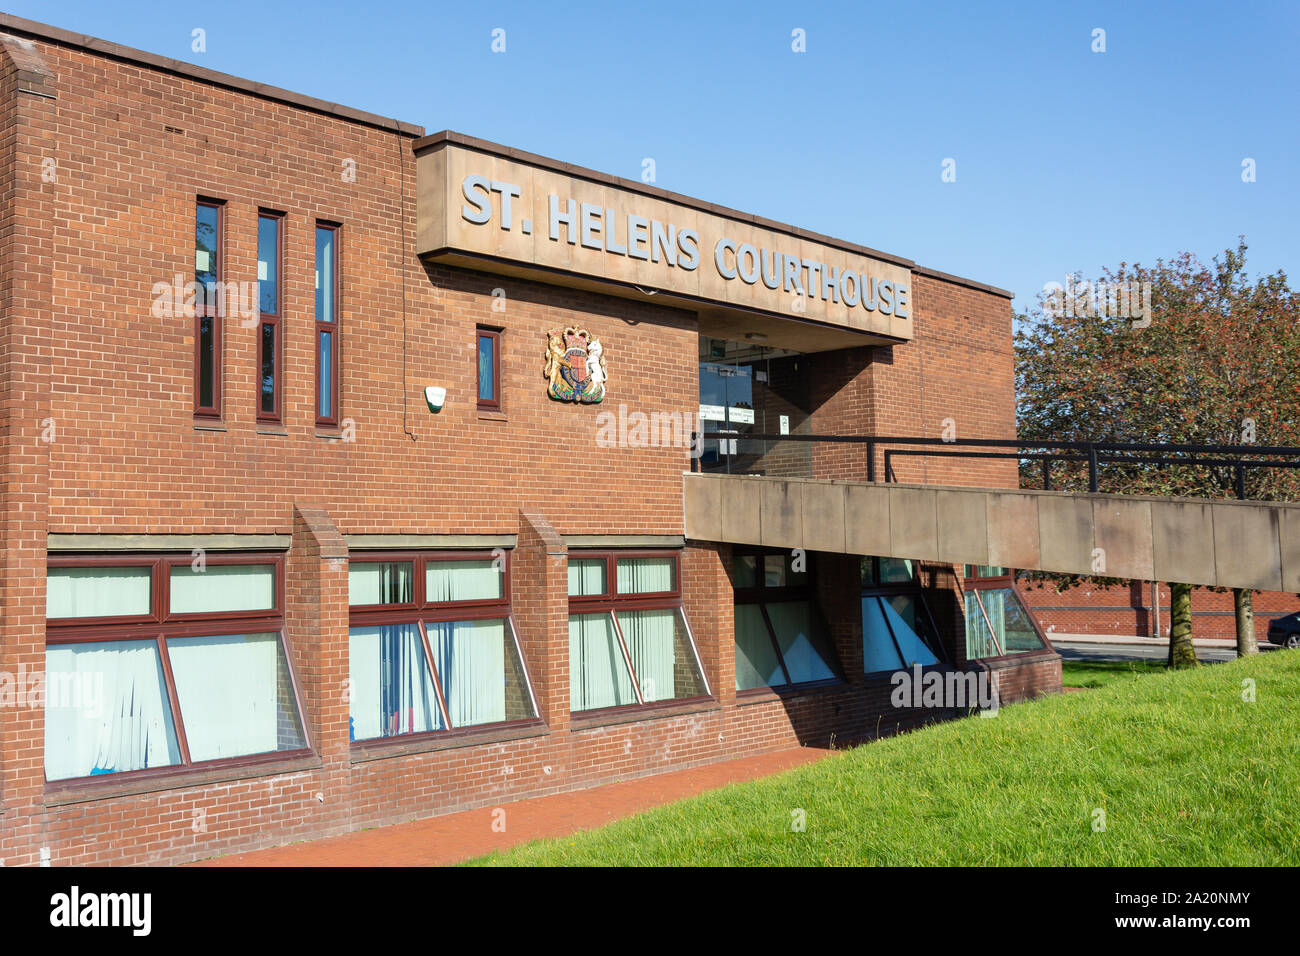 Entrance to St Helens Courthouse, Birchley Street, St Helens, Merseyside, England, United Kingdom Stock Photo